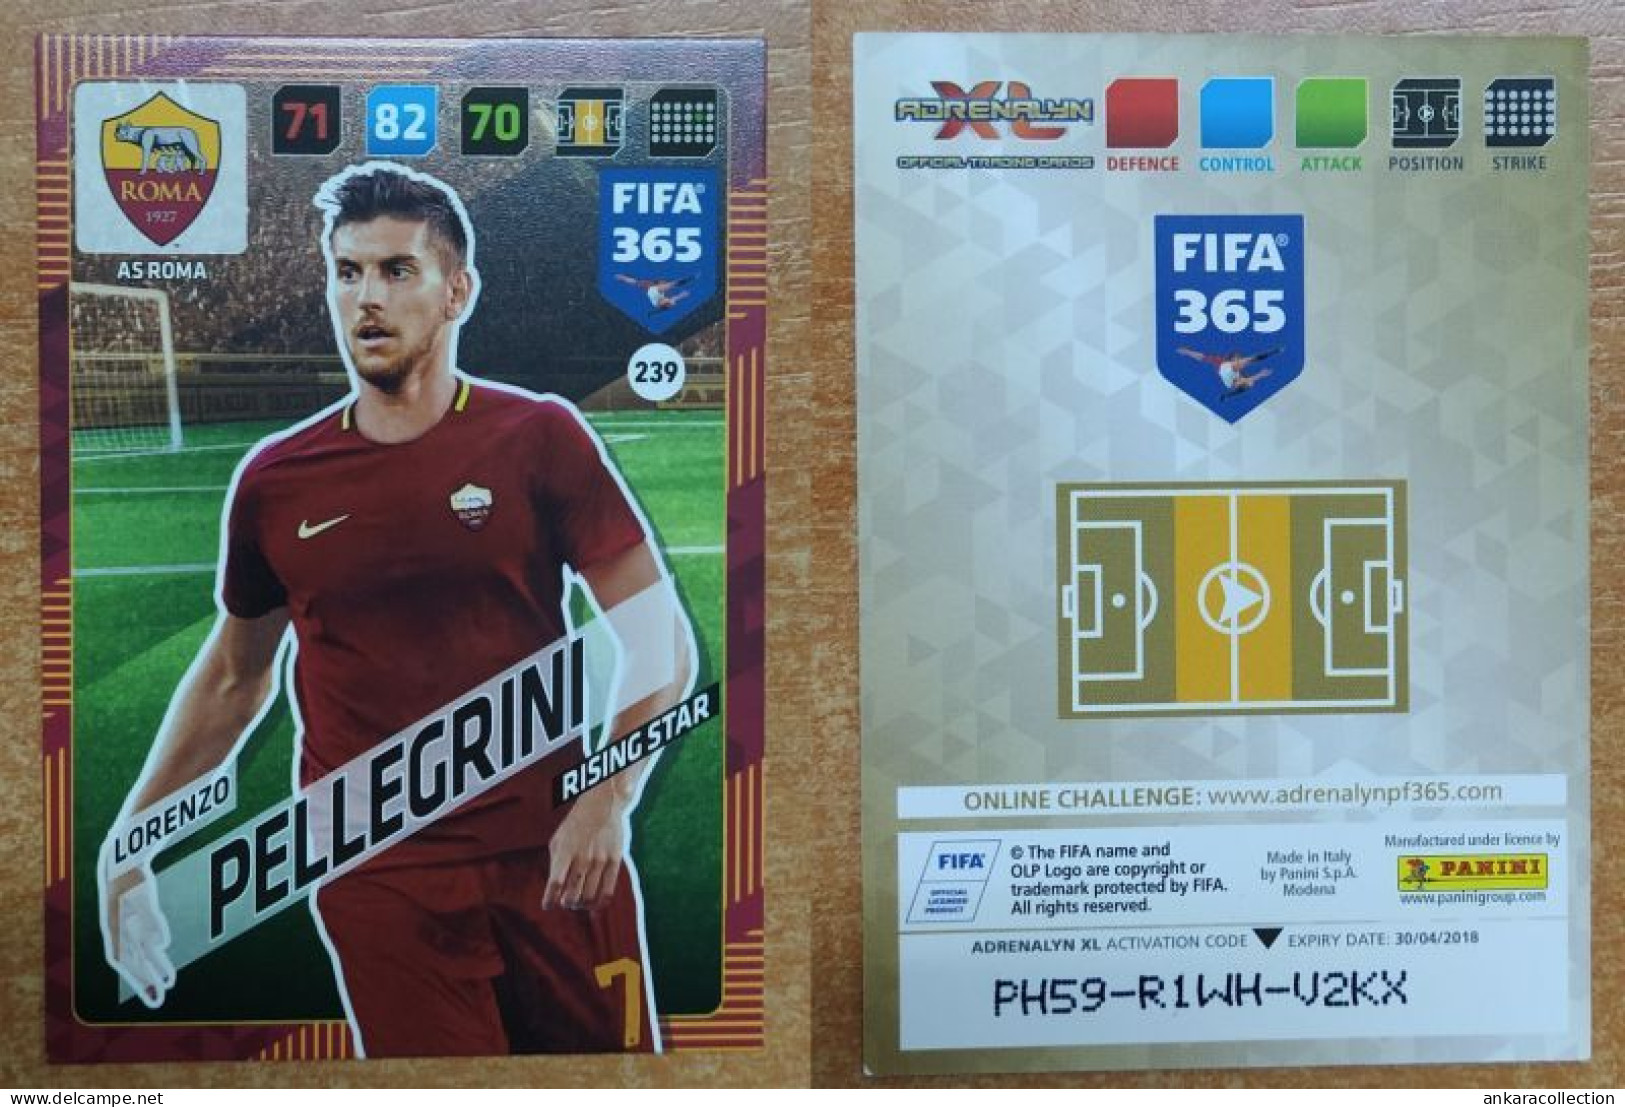 AC - 239 LORENZO PELLEGRINI  AS ROMA  RISING STAR  FIFA 365 PANINI 2018 ADRENALYN TRADING CARD - Tarjetas